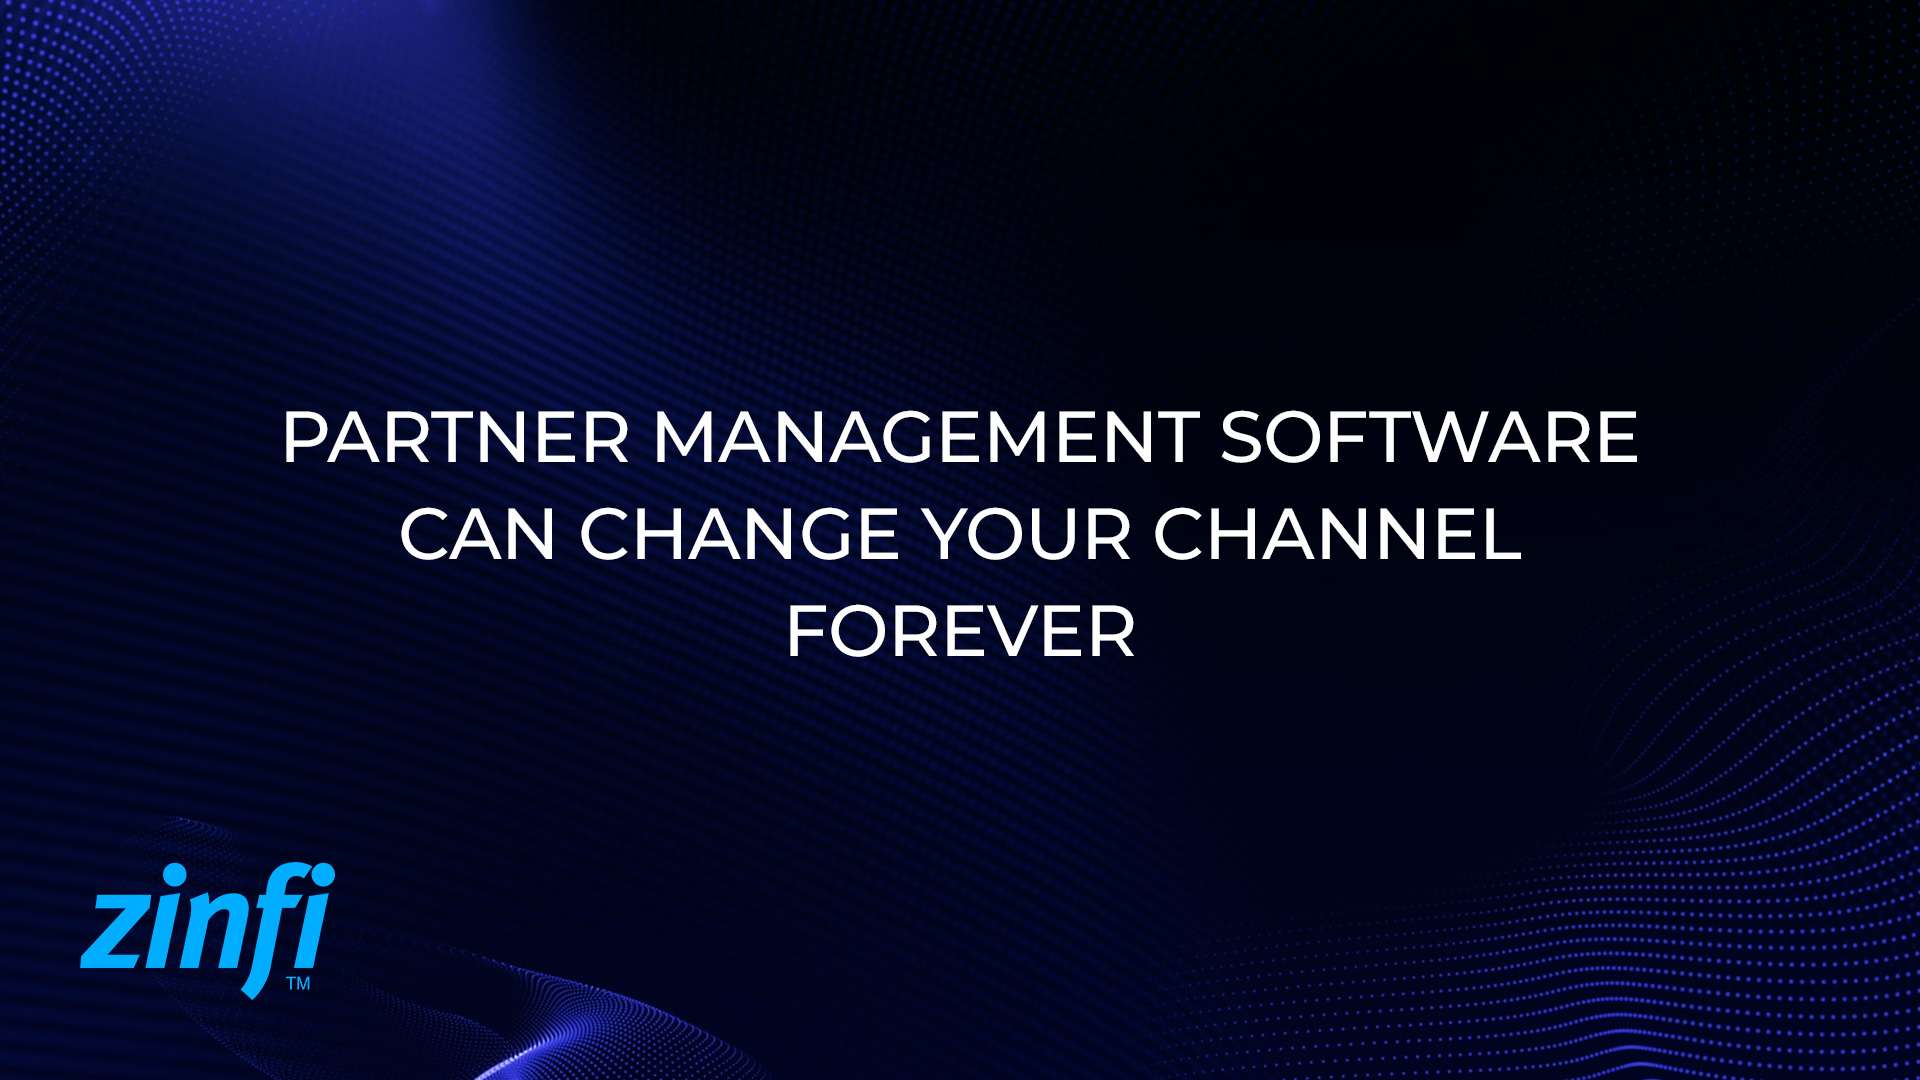 Partner Management Software Impact Forever